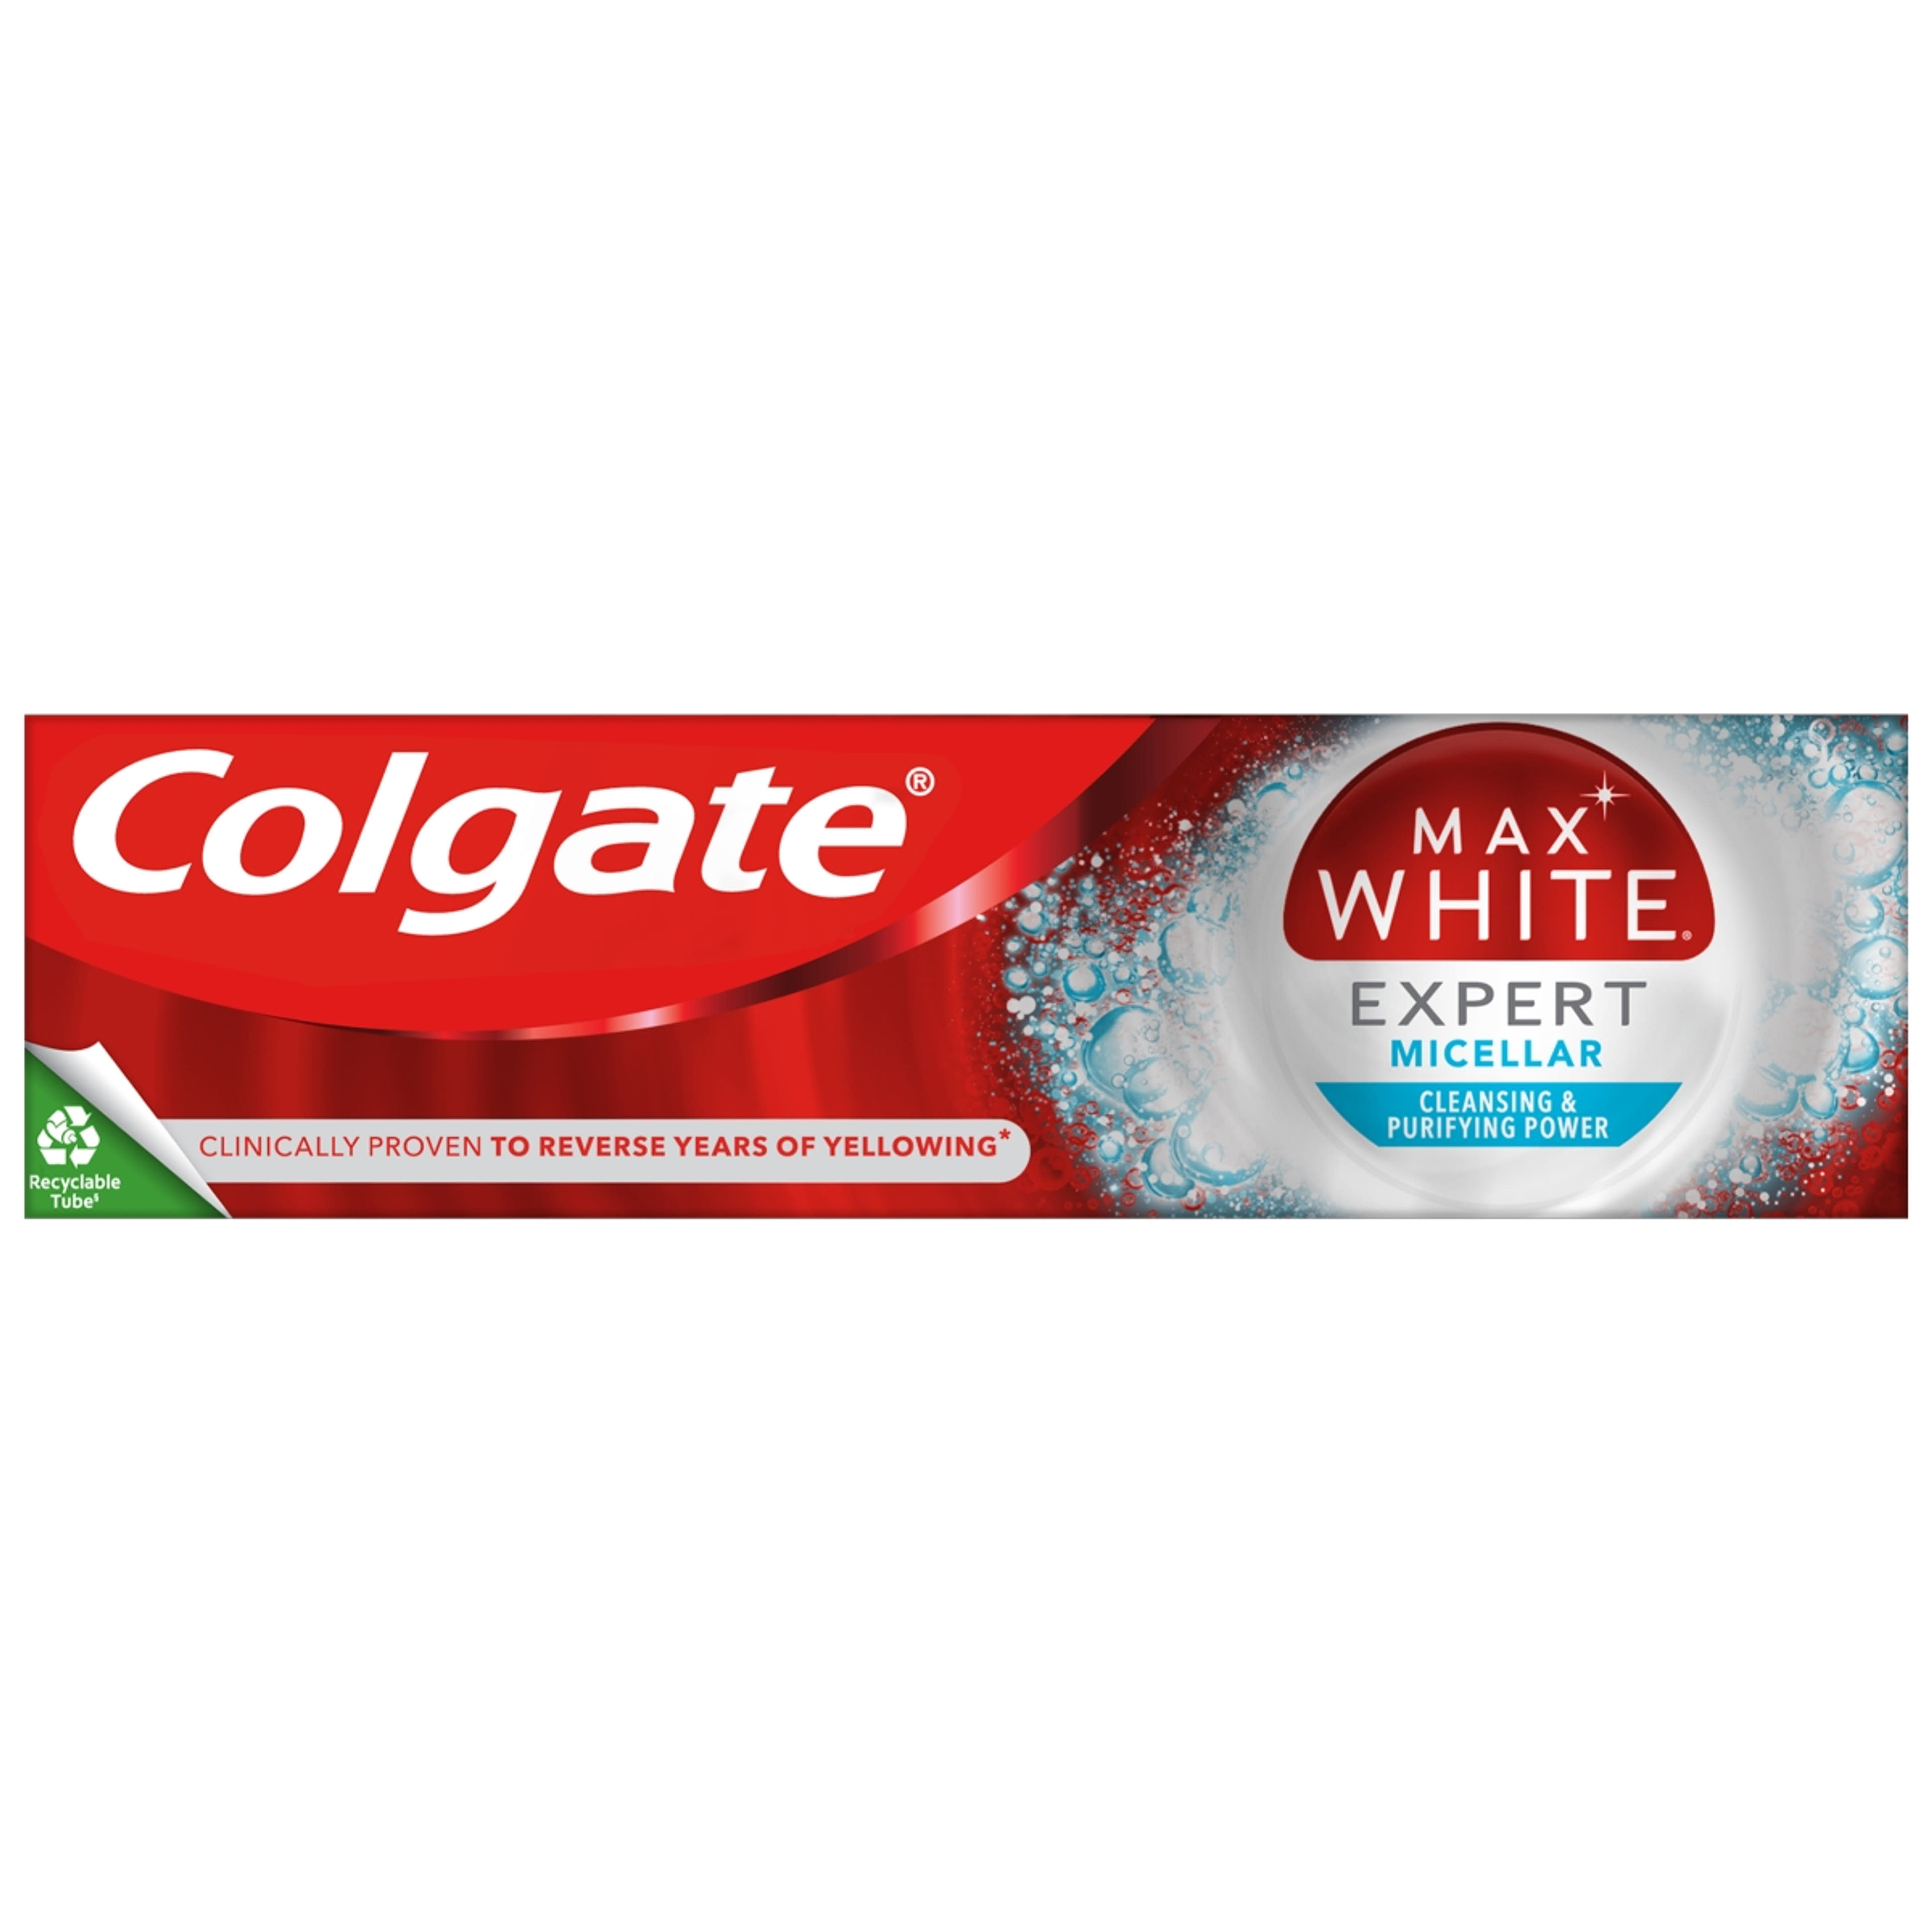 Colgate Max White Expert Micellar fogfehérítő fogkrém - 75 ml-1